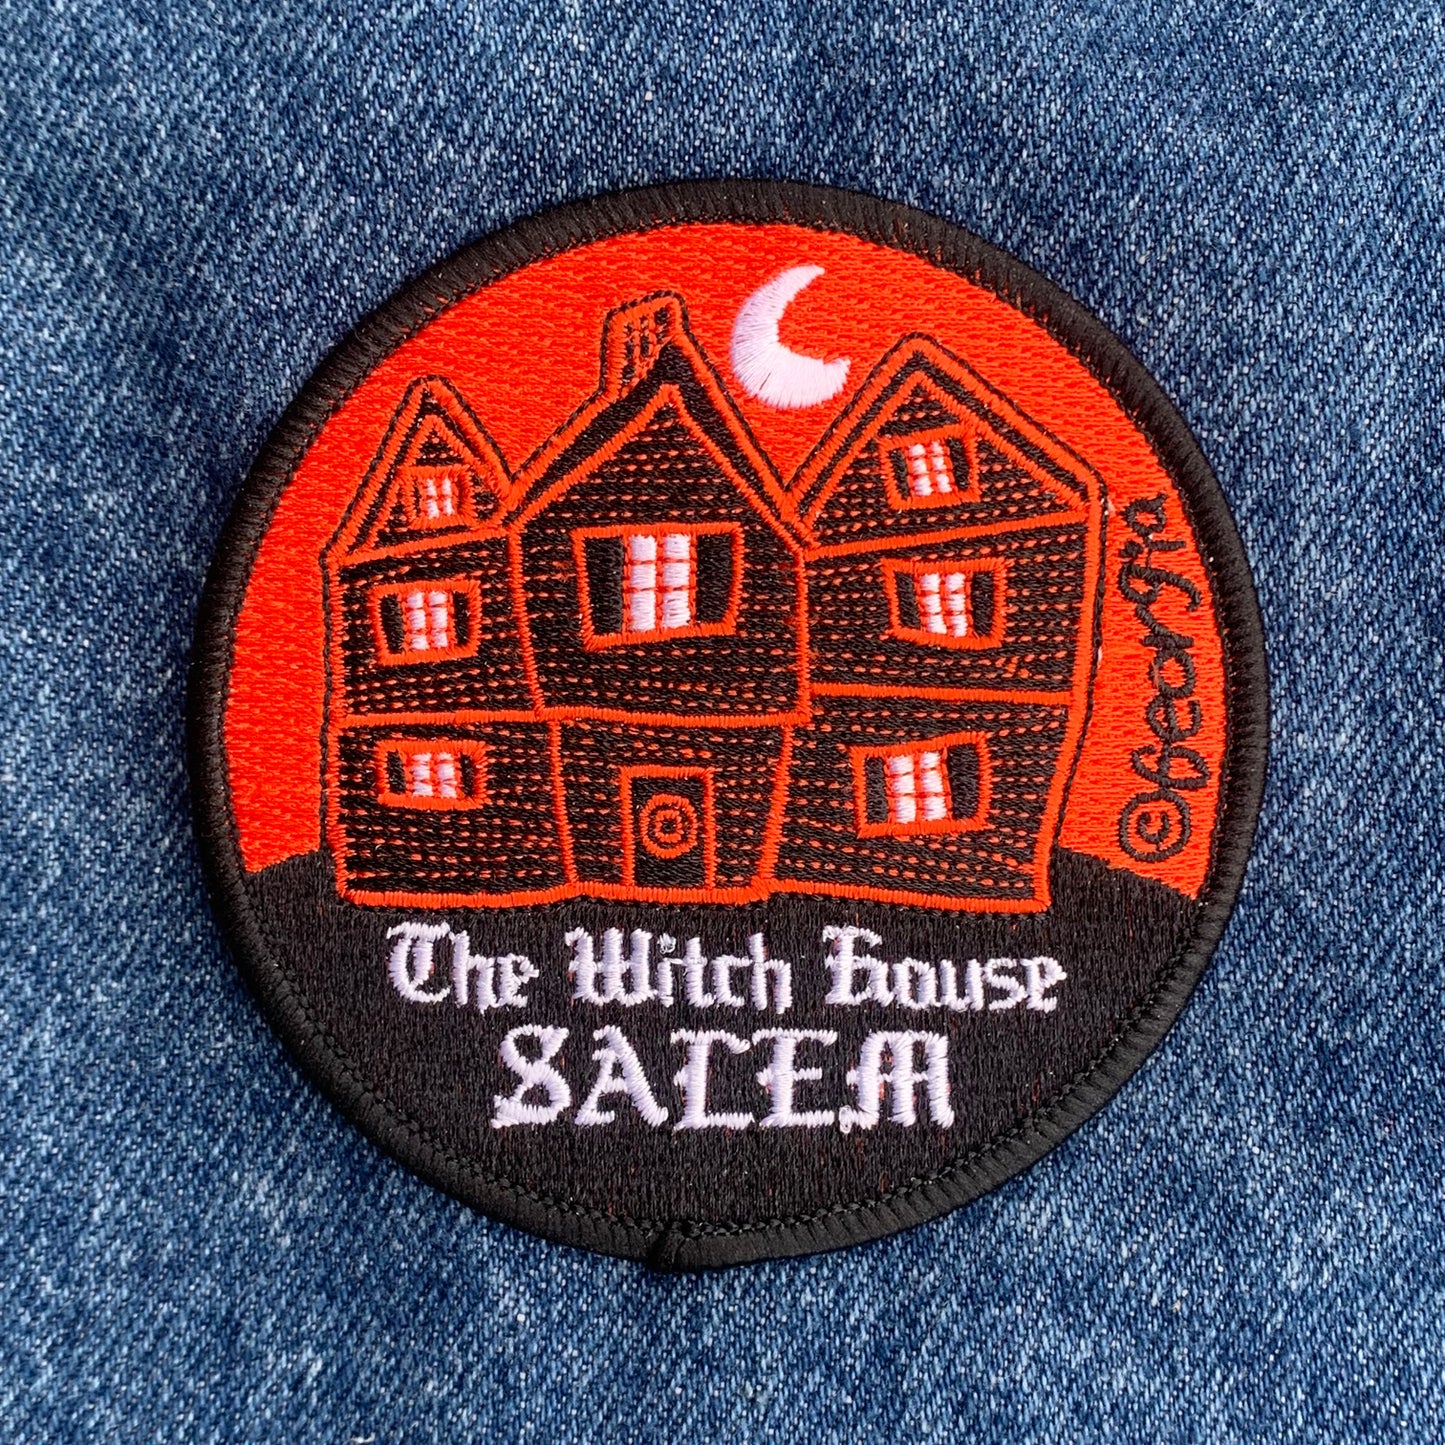 Salem "Witch House" Circle Witch Patch